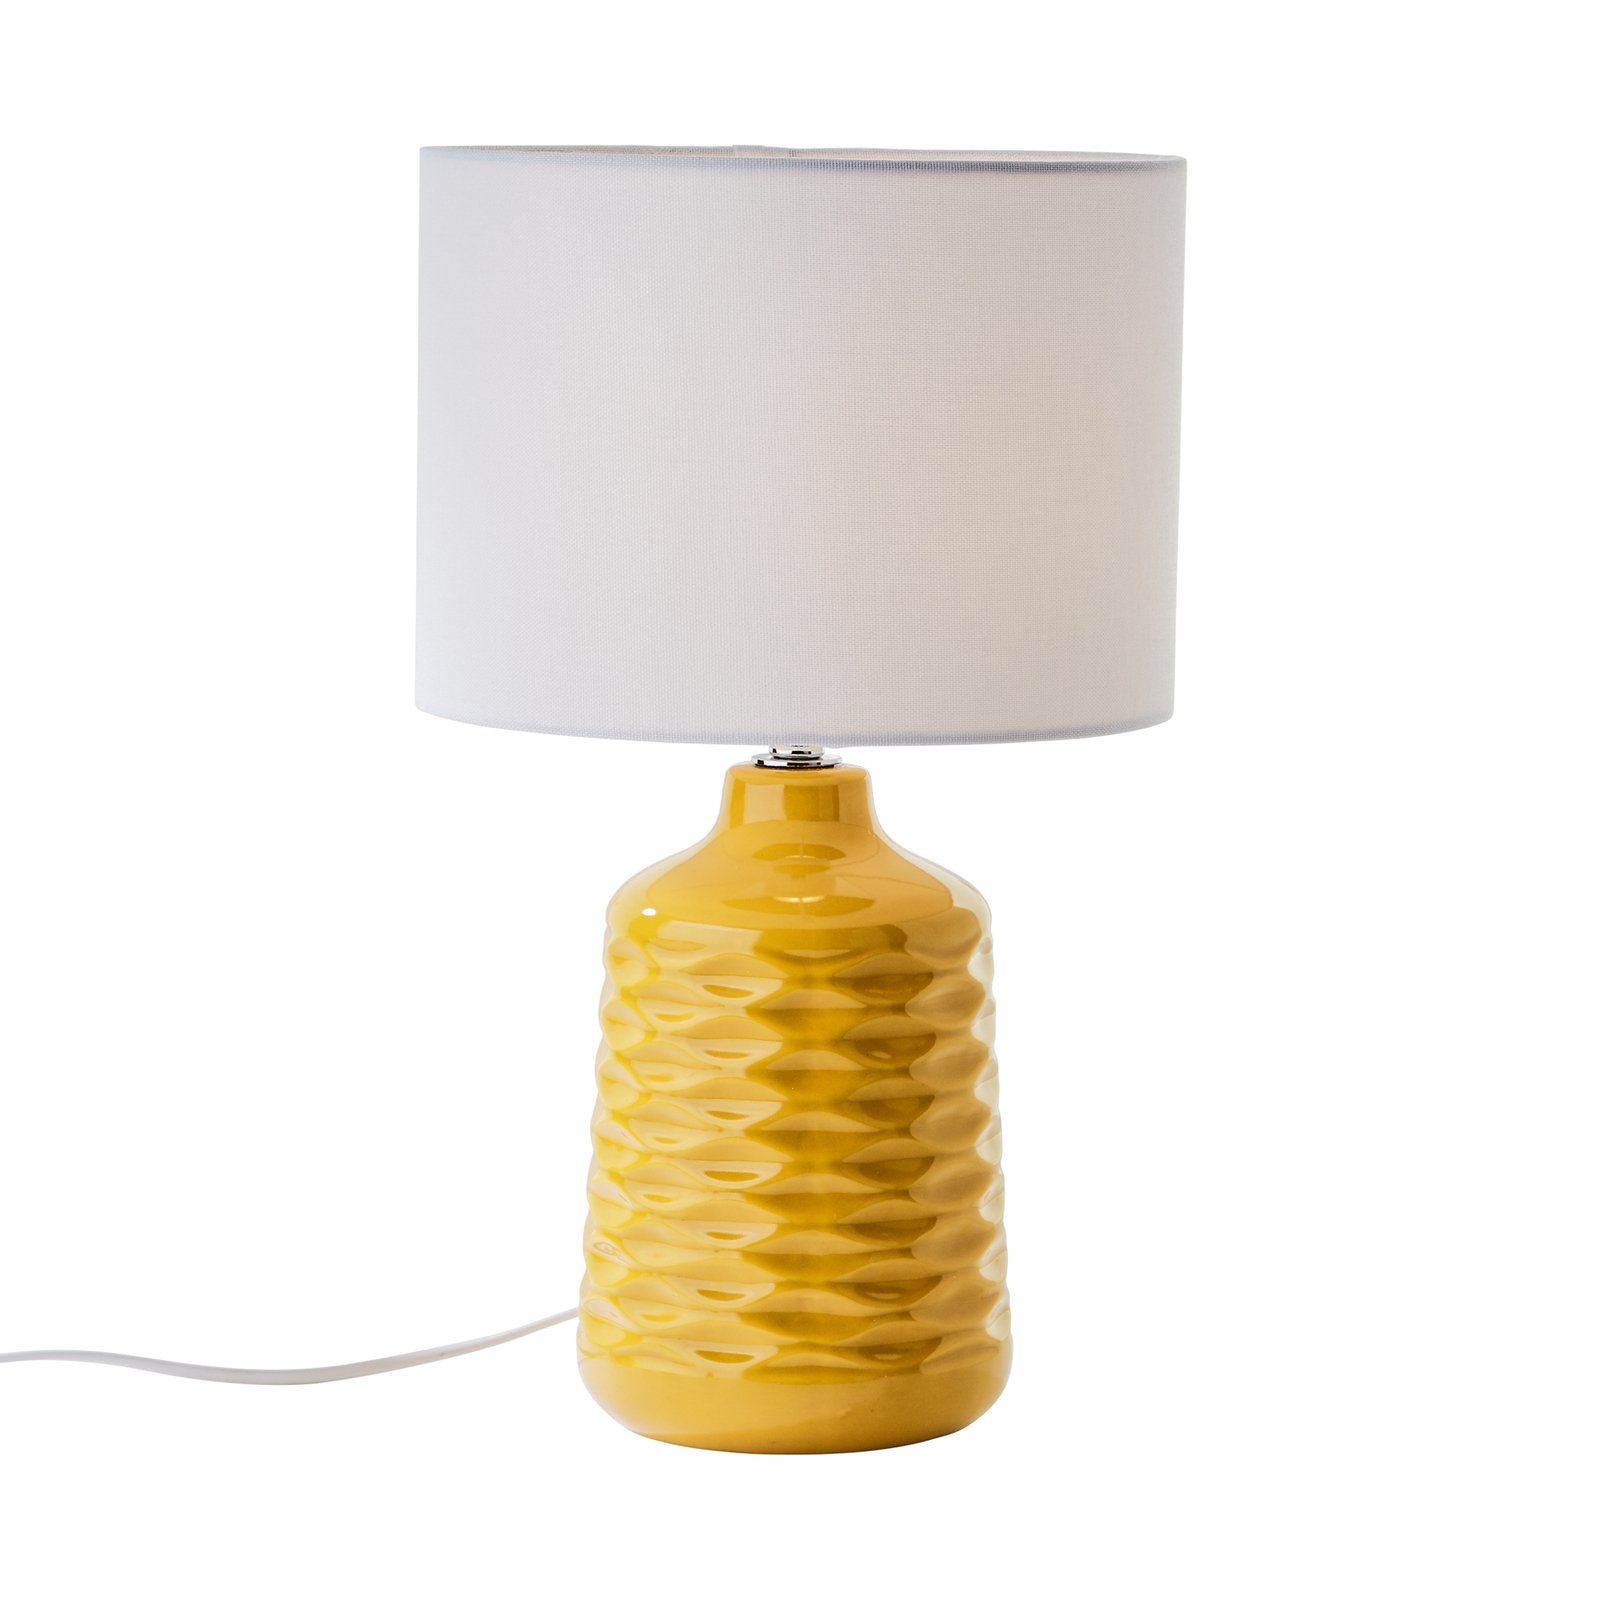 Ilysa table lamp white fabric, yellow ceramic base